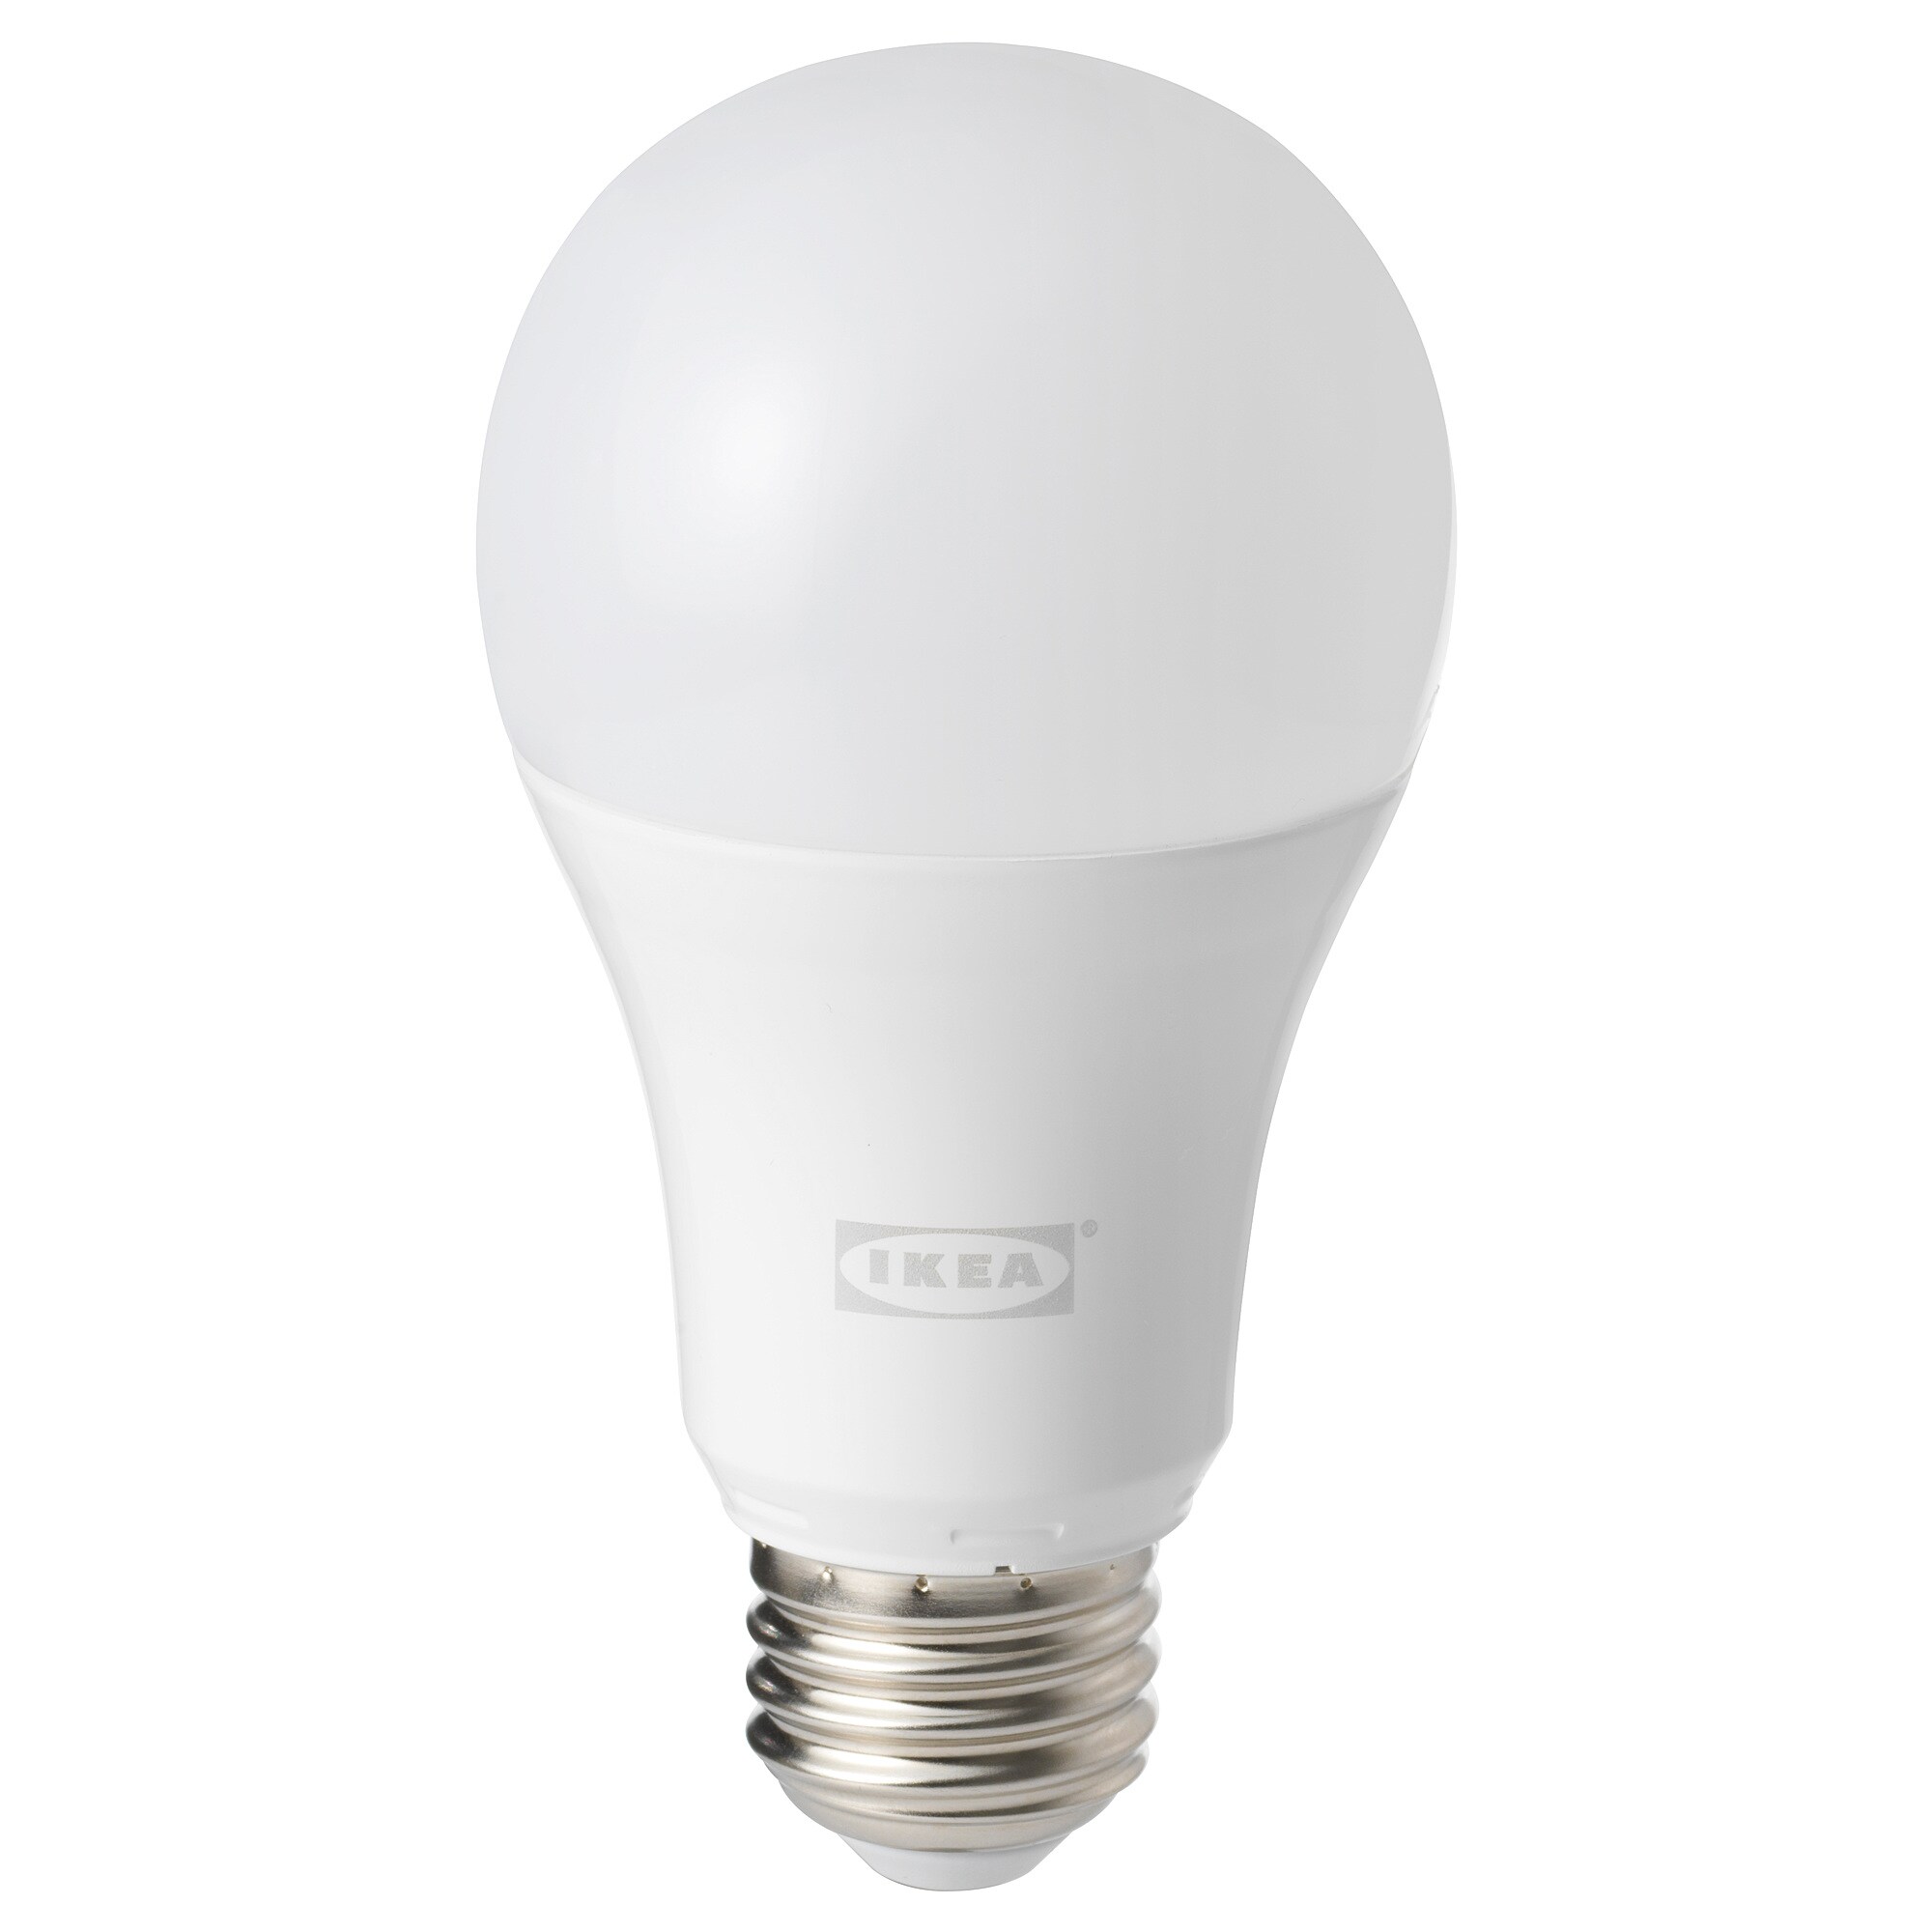 tradfri-led-bulb-e26-1000-lumen-wireless-dimmable-white-spectrum-globe-opal-white__0609099_pe684320_s5